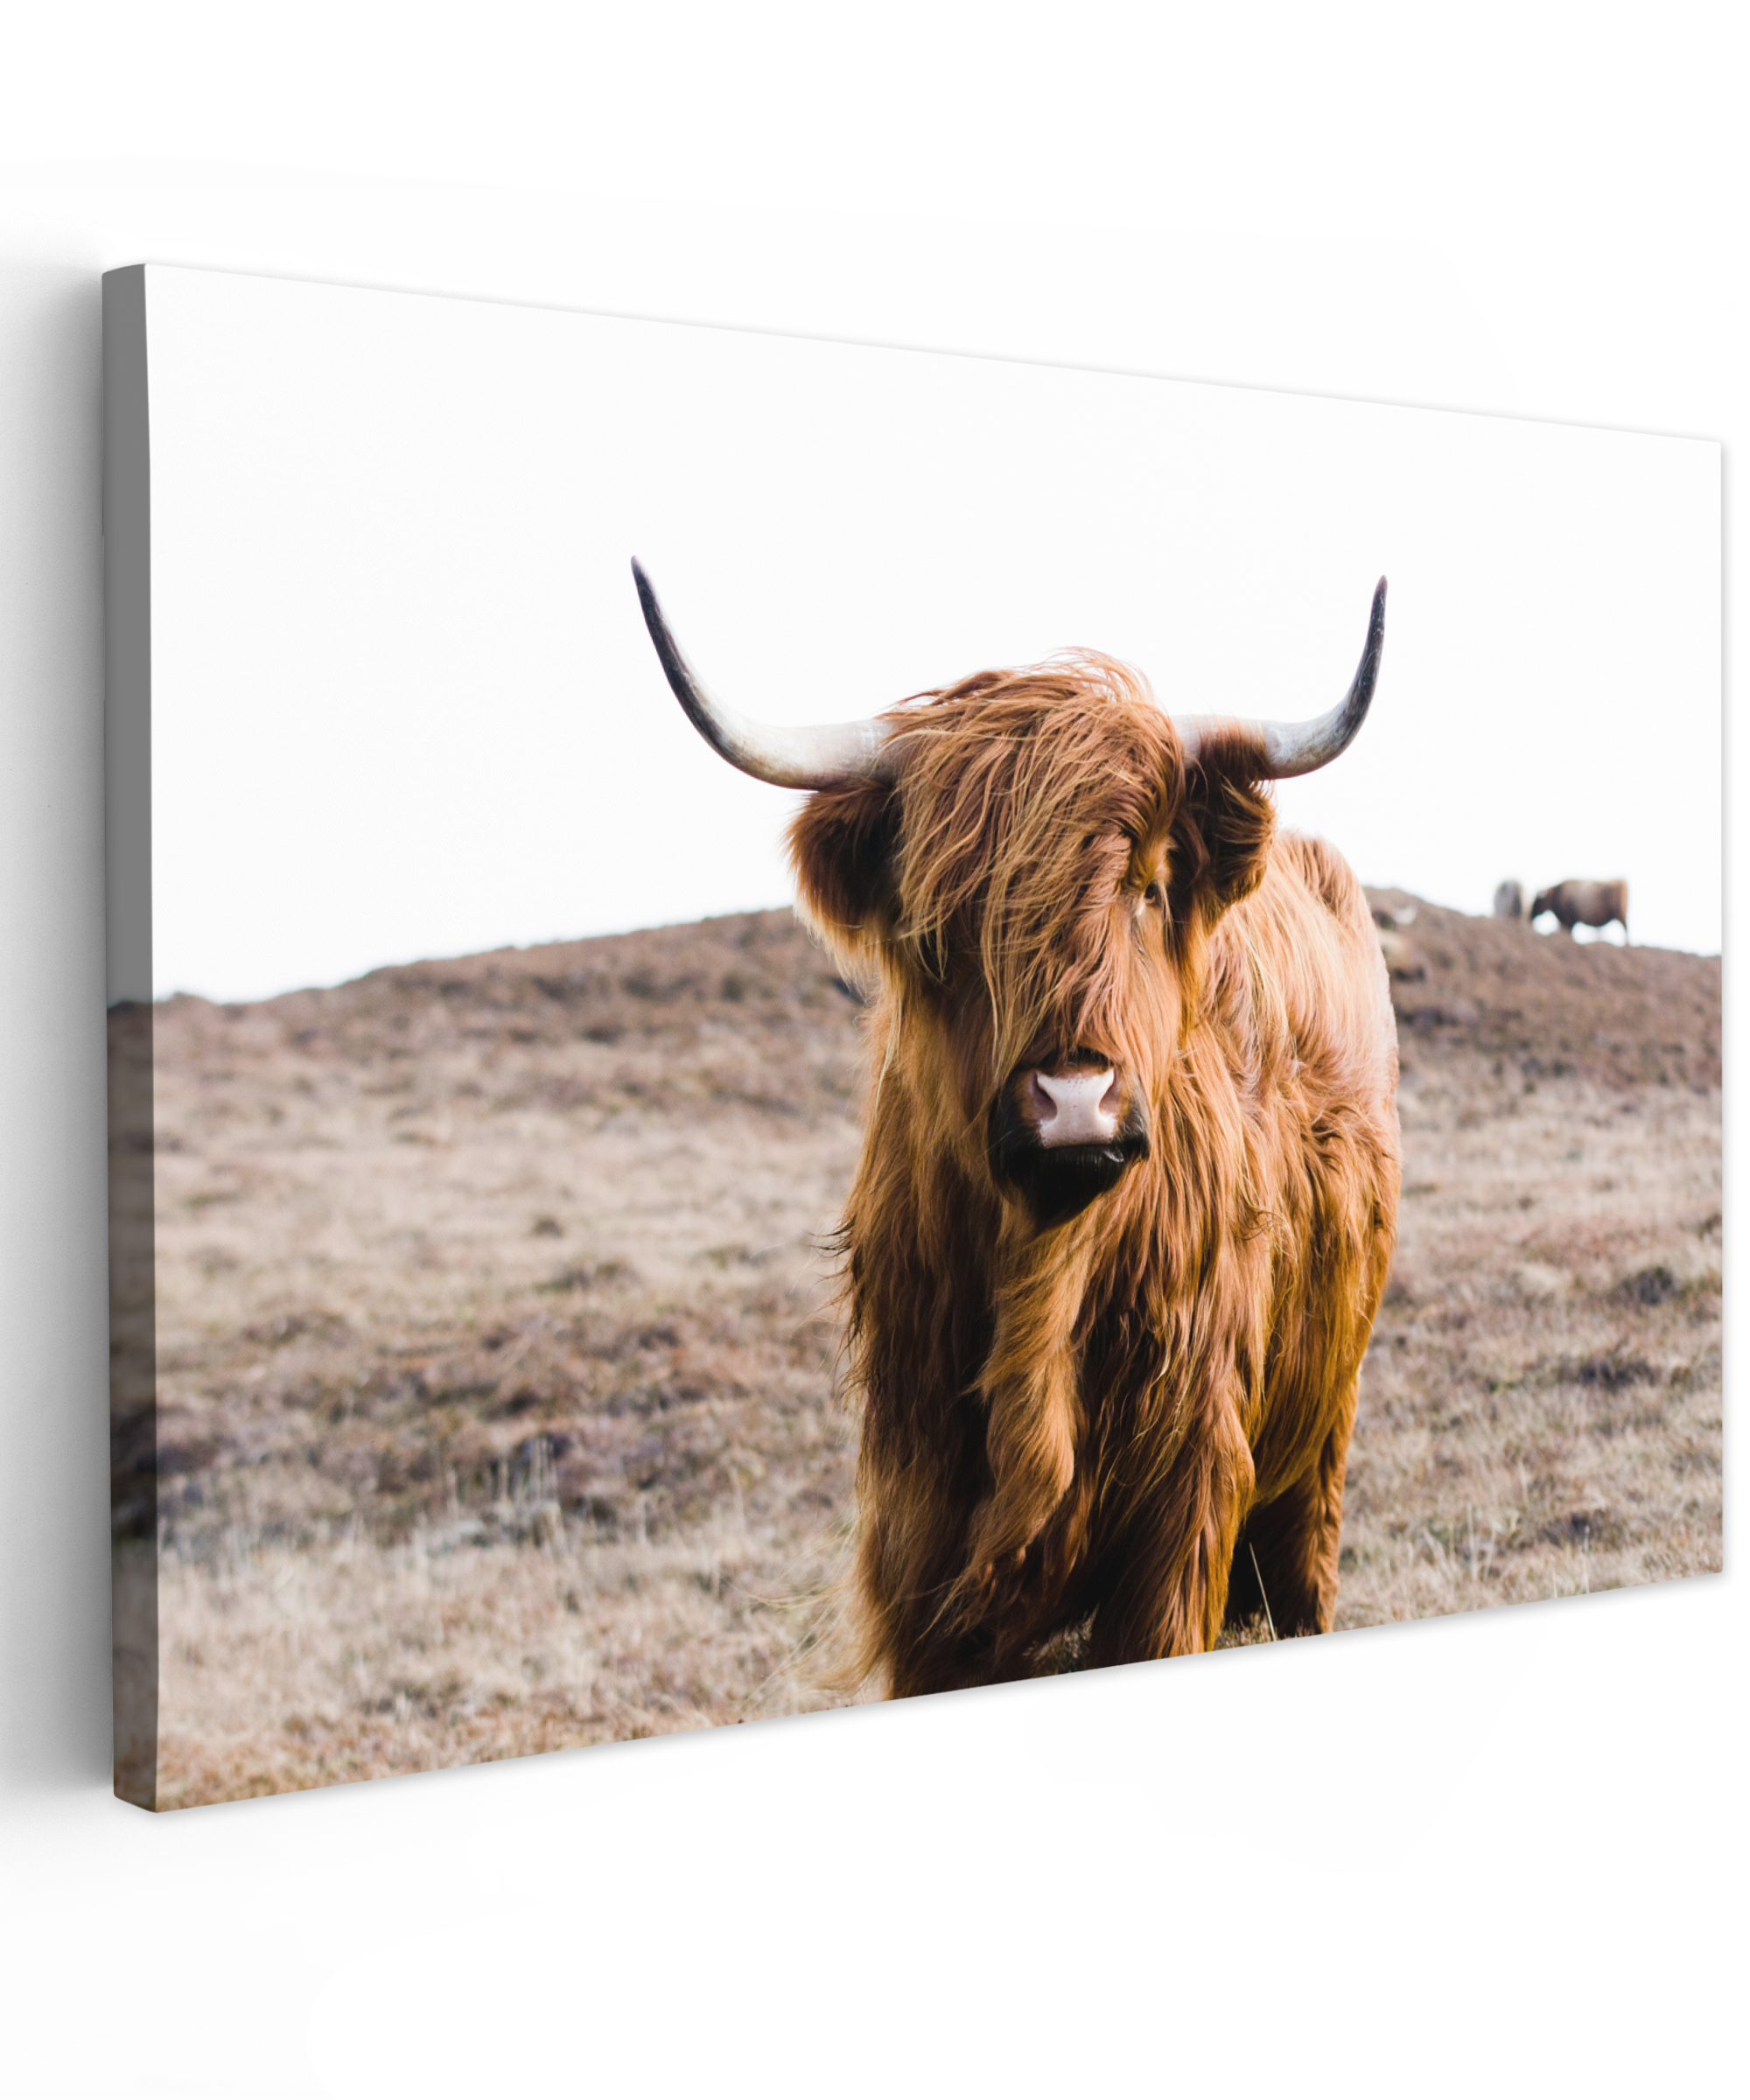 Leinwandbild - Schottischer Highlander - Landschaft - Kuh - Braun - Tiere - Natur